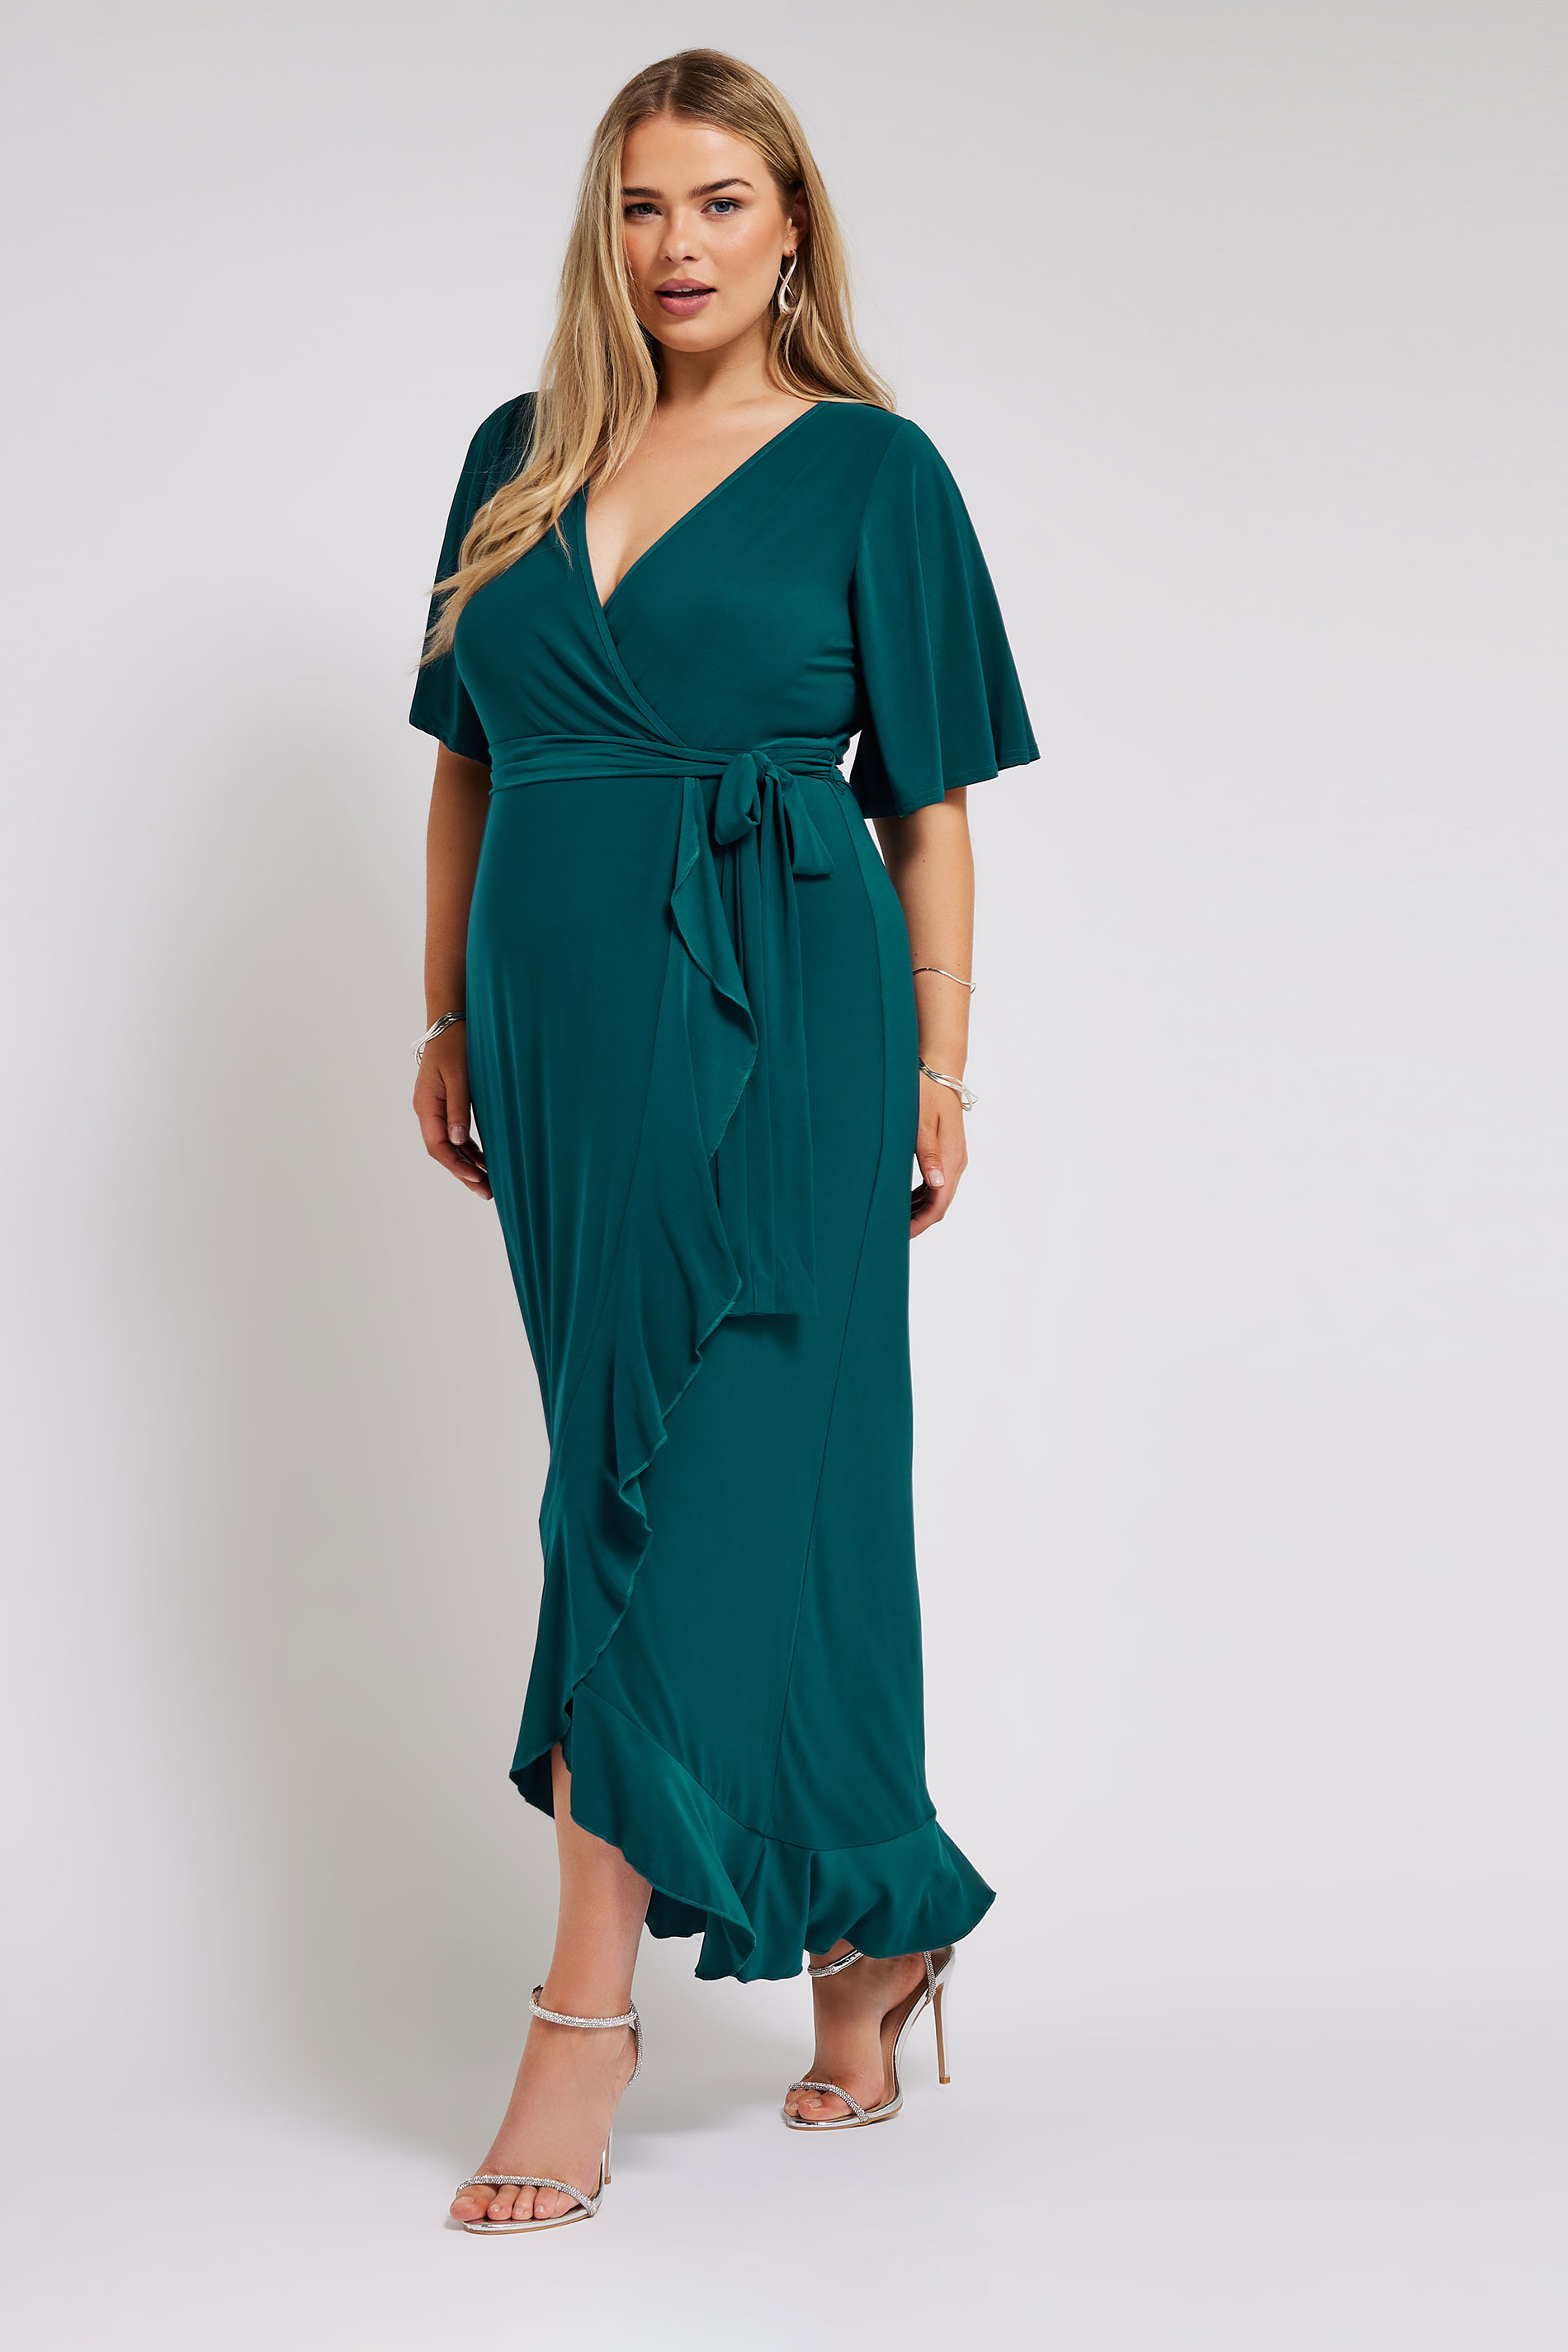 YOURS Plus Size Green Ruffle Hem Wrap Dress | Yours Clothing 2